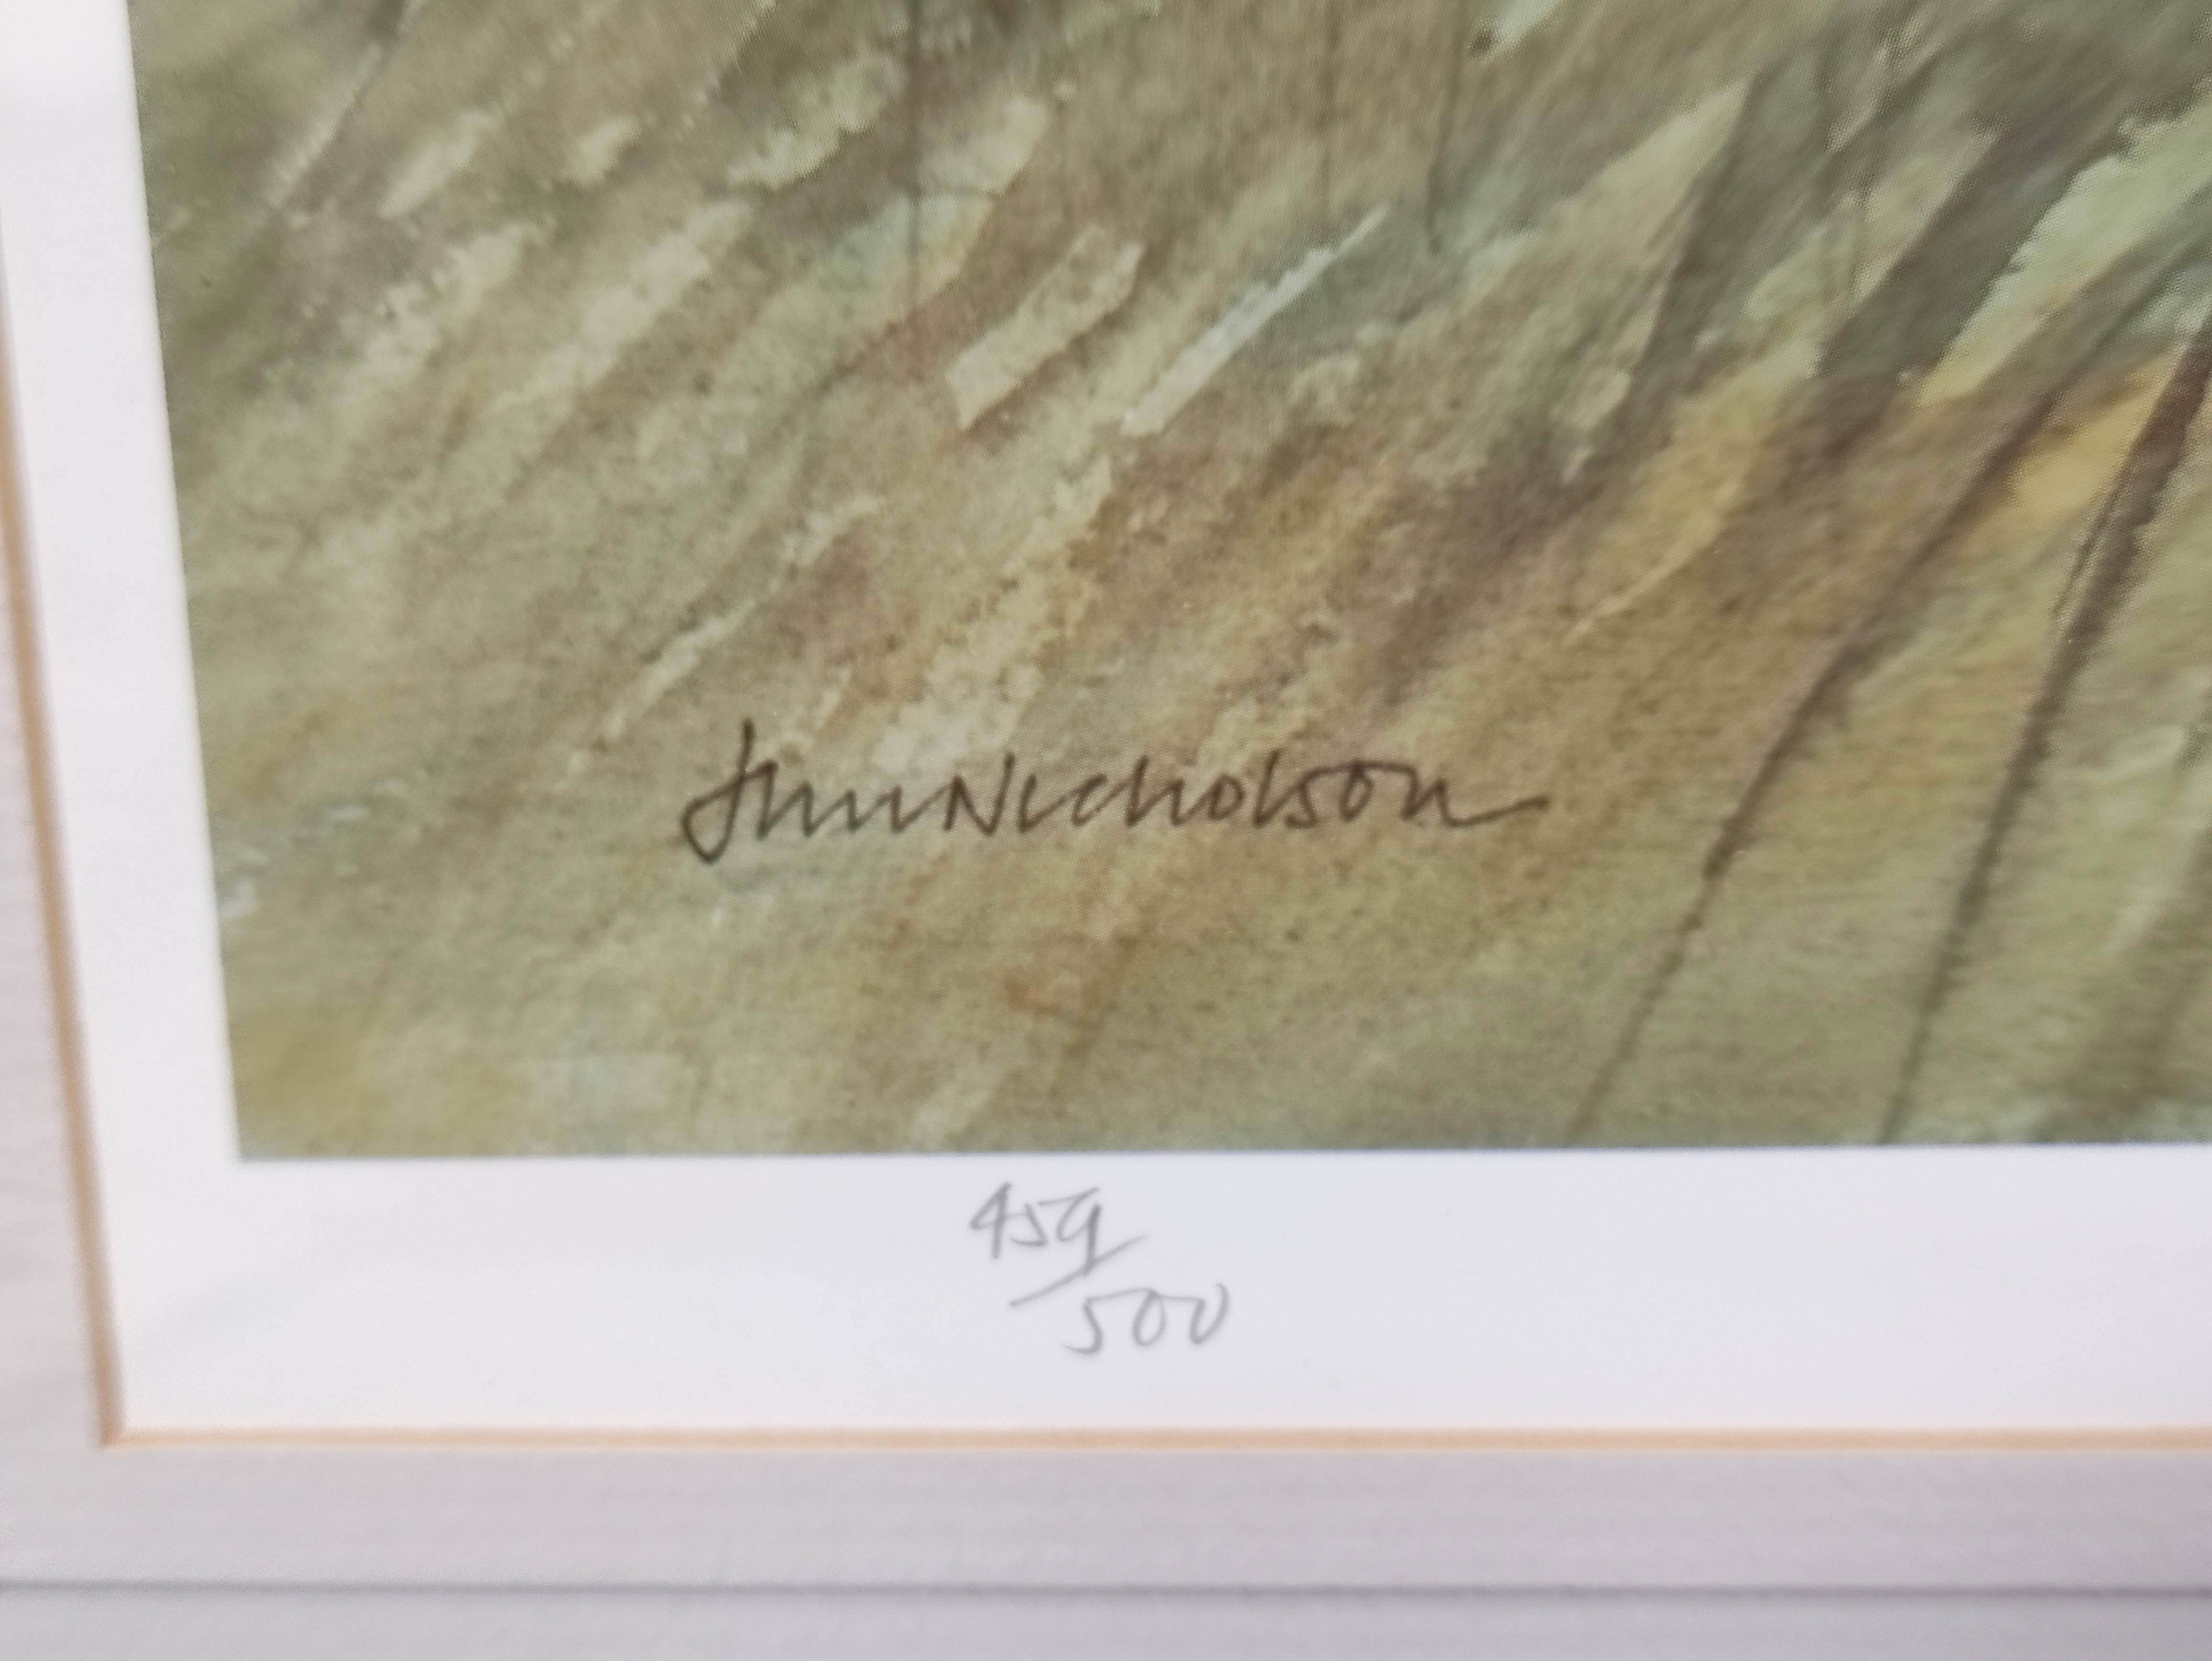 Jim Nicholson. Set of 4 pencil signed colour prints, ltd. eds. 500. Views in Skye & Scotland. - Image 3 of 12